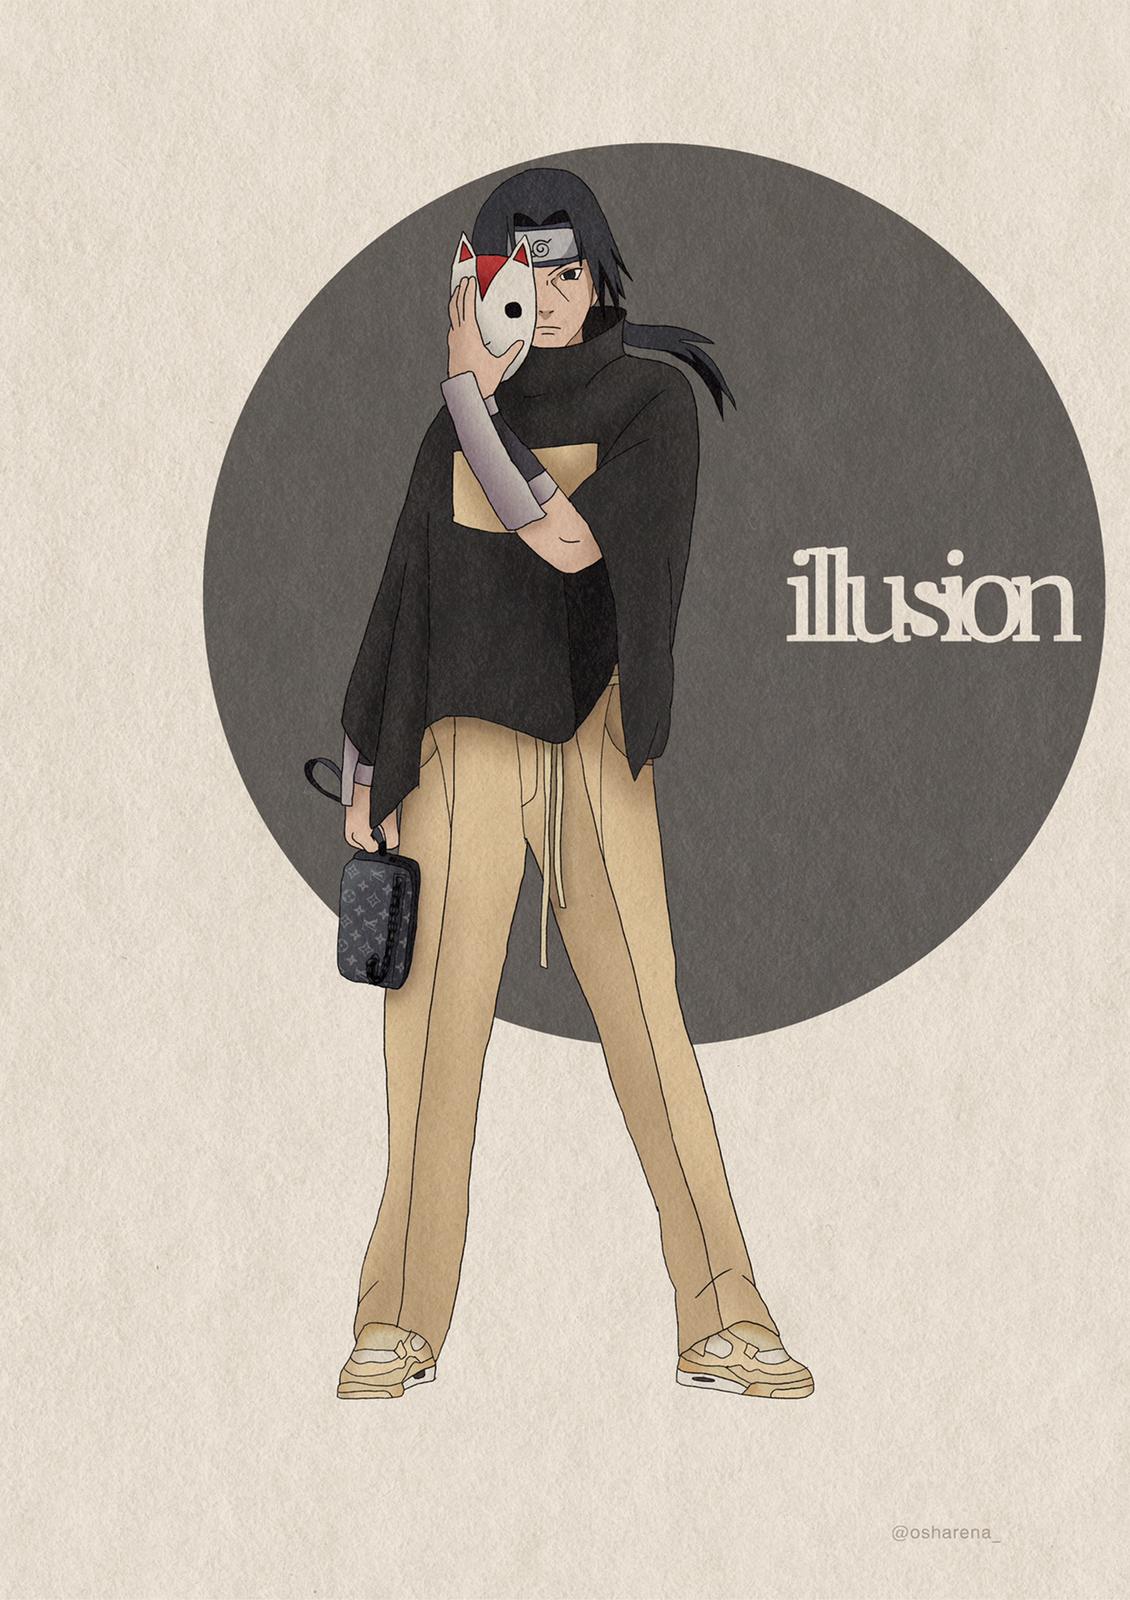 .Poster Itachi Illusion/Osharena